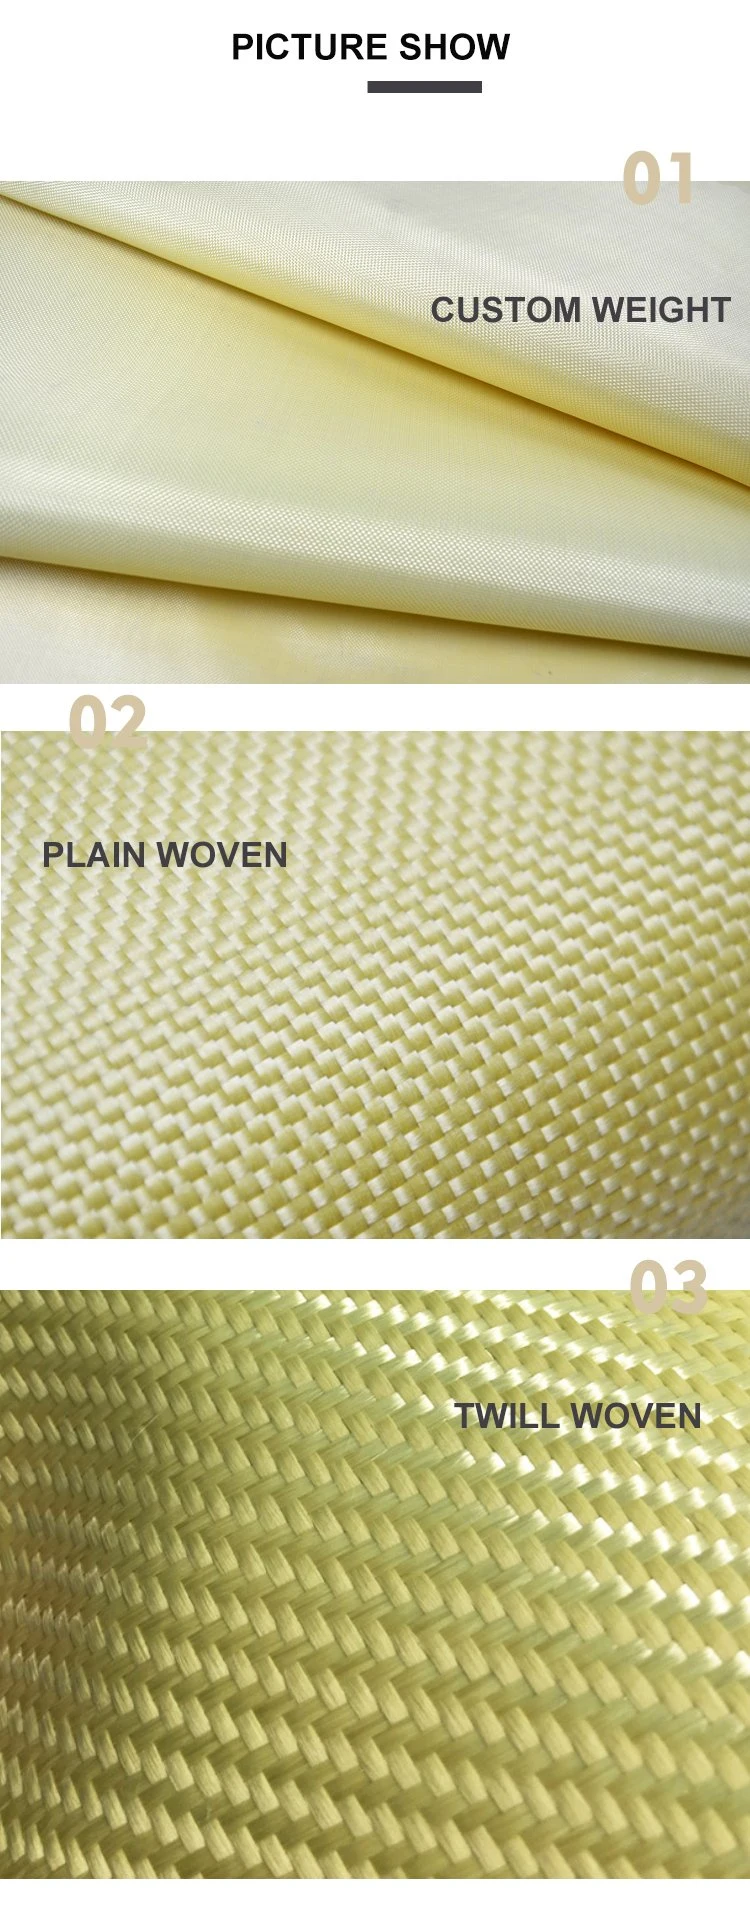 China Factory Woven Workwear Kevlars 3000d400g Aramid Fiber Fabric for IC Part Original and New